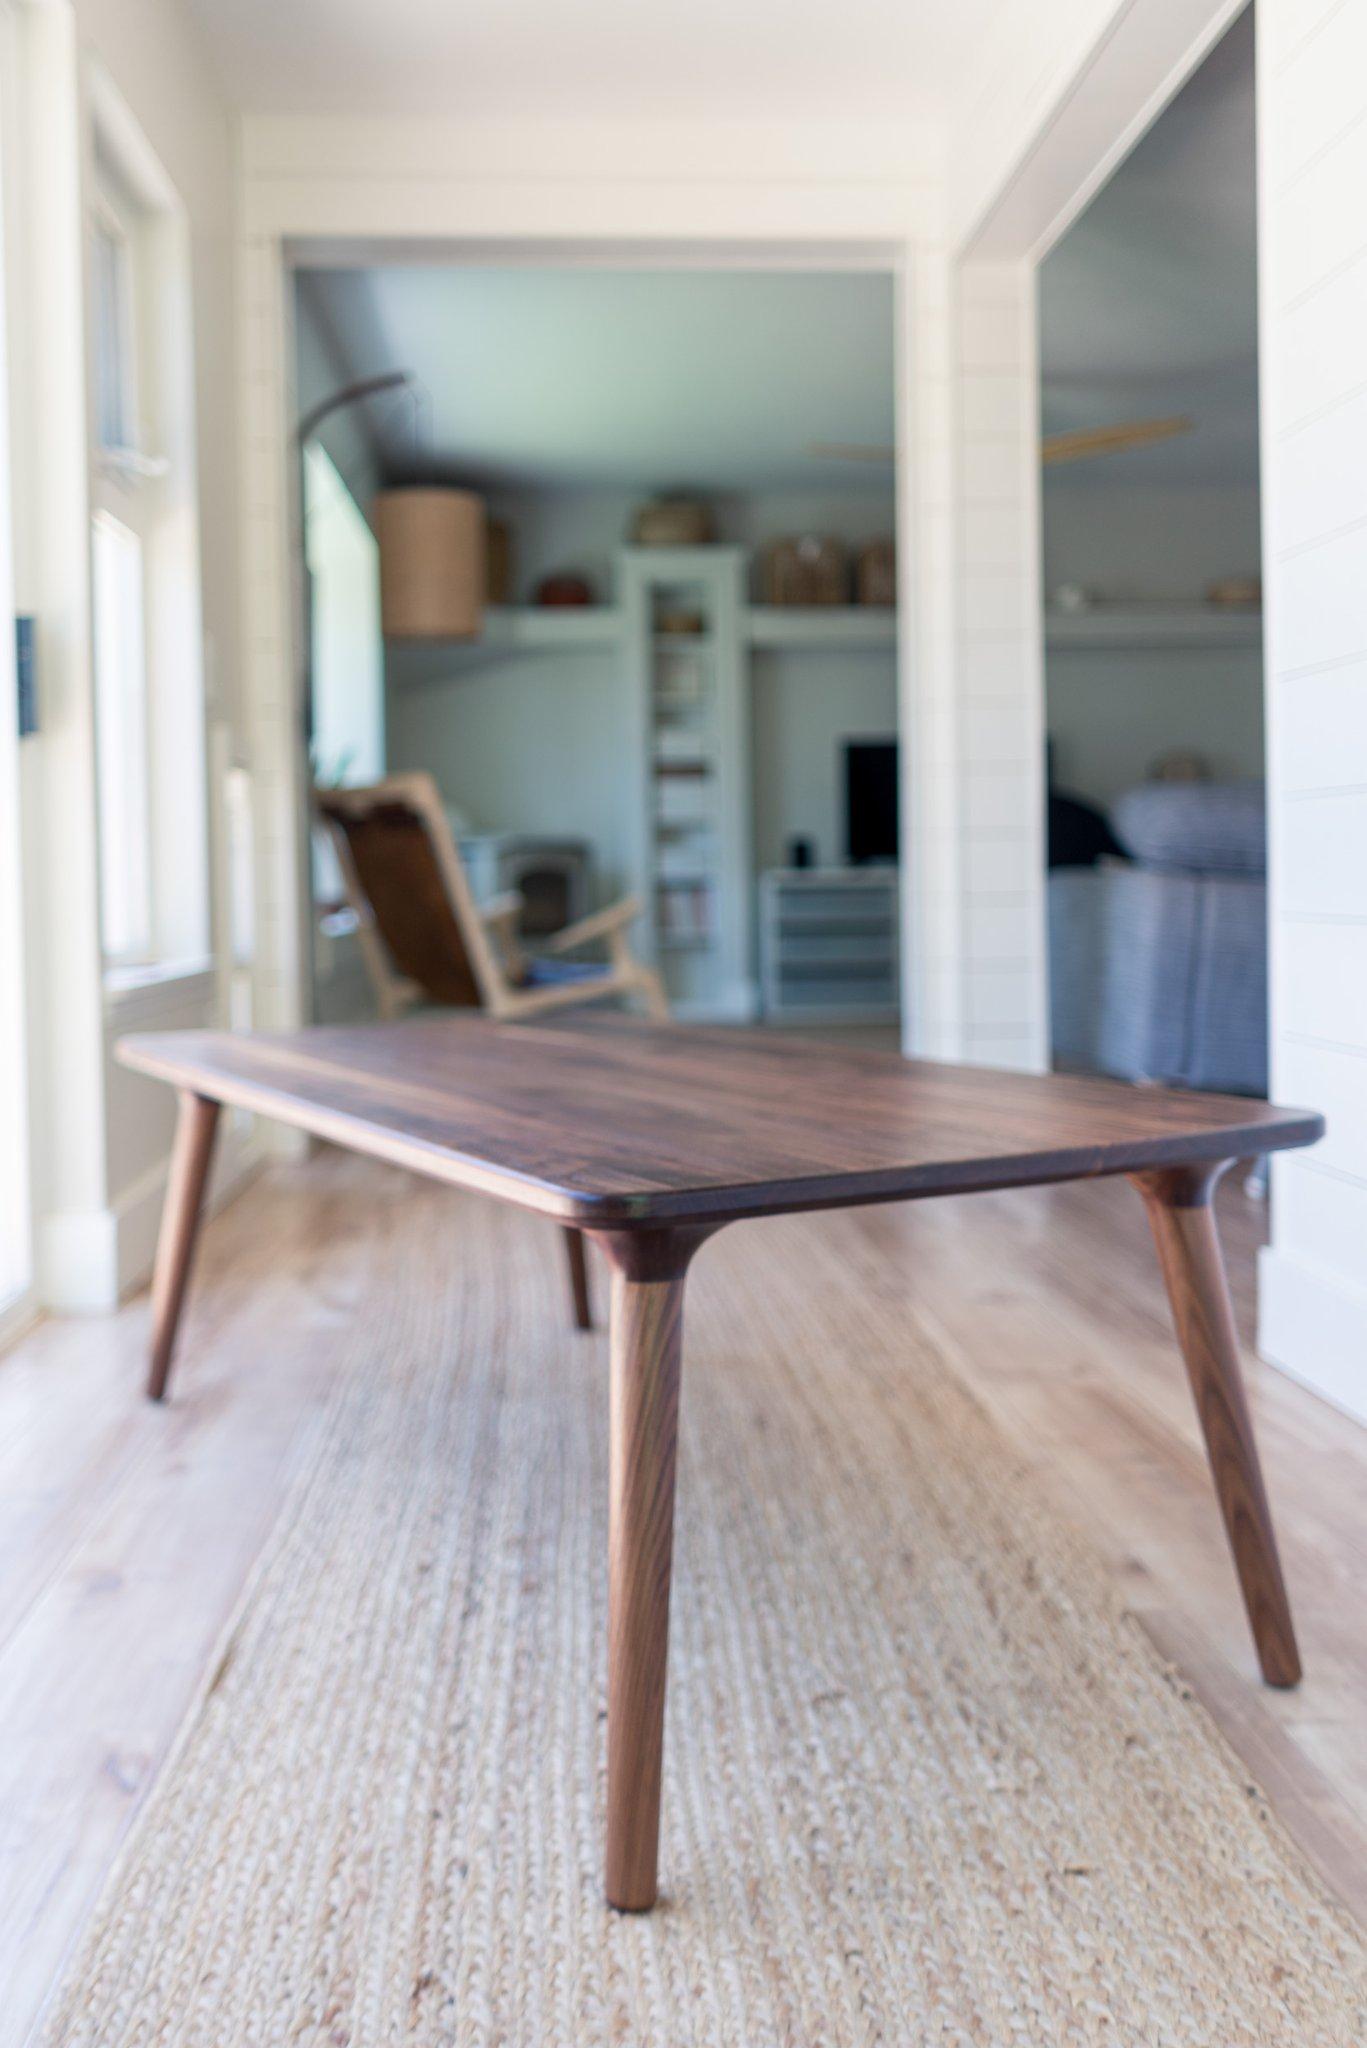 Walnut coffee table by Fernweh Woodworking
Dimensions: 
W 24